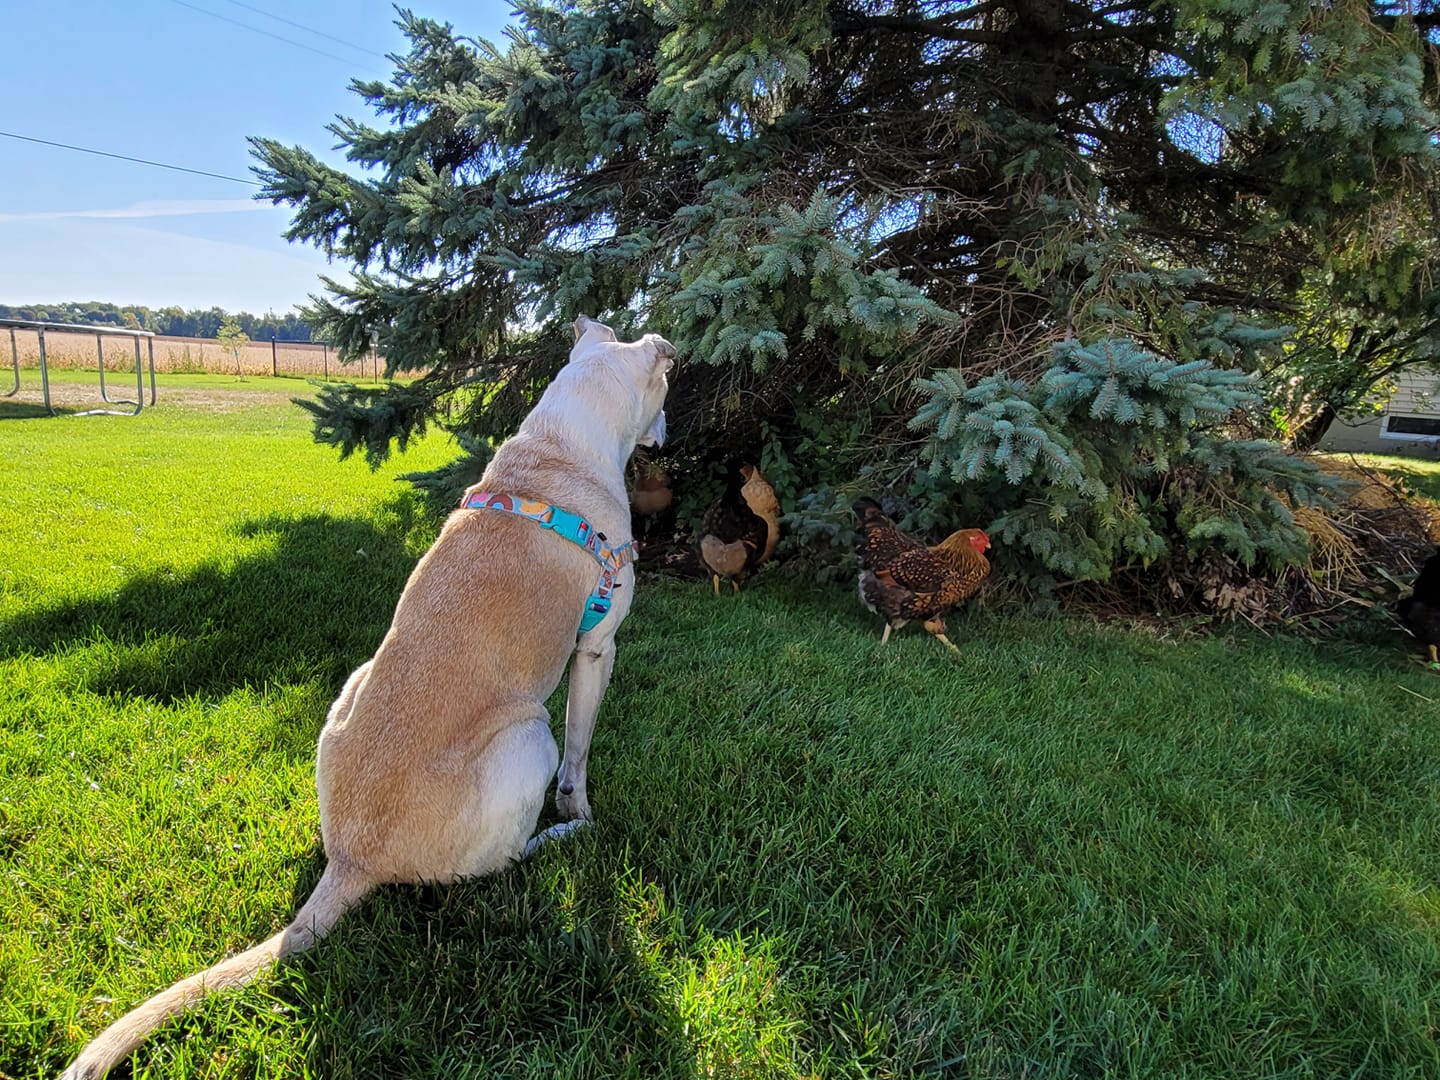 Coop guarding the flock